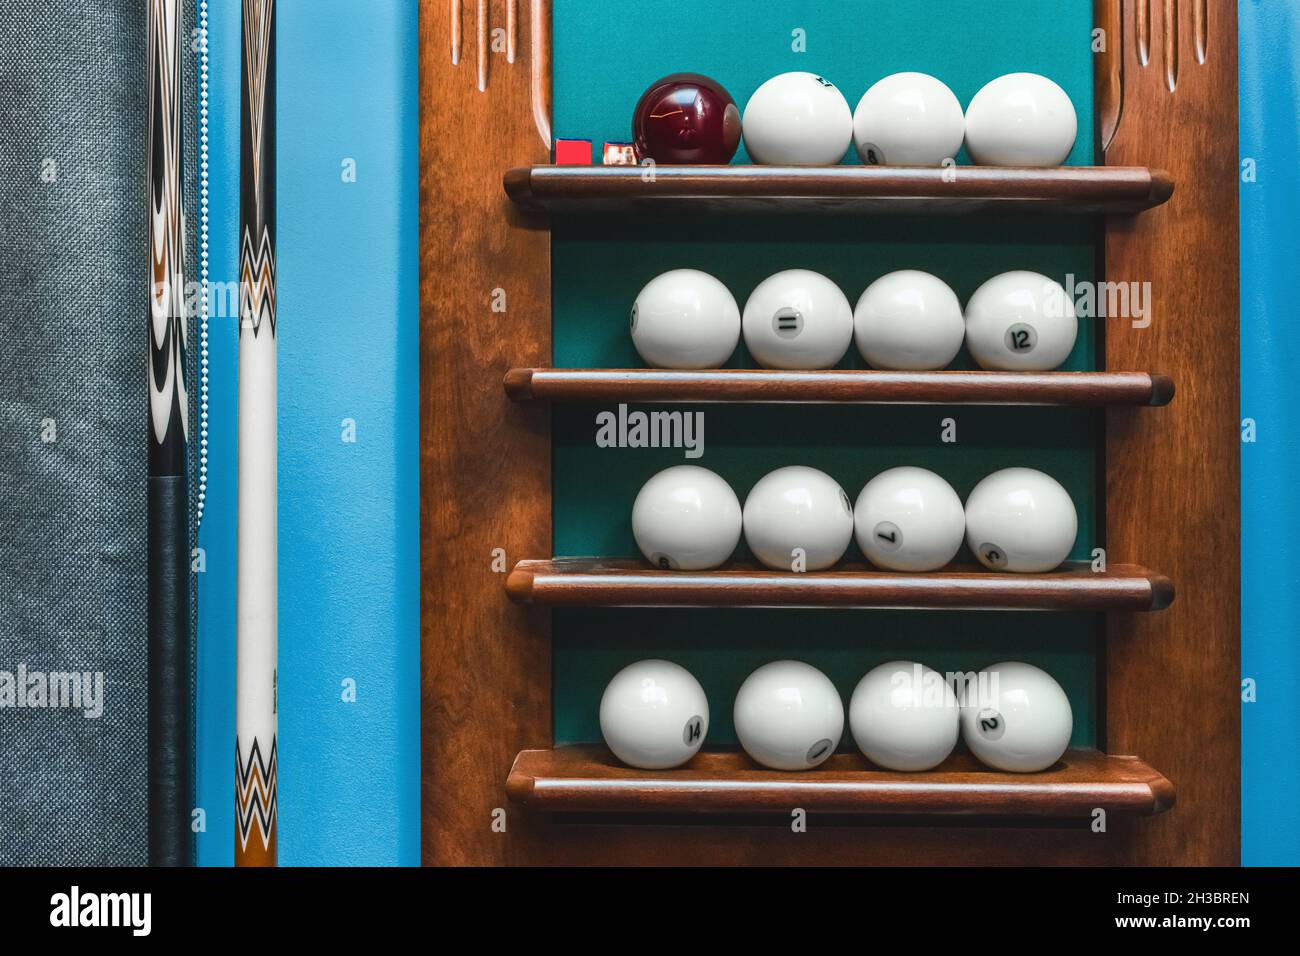 Shelf with white balls and billiards equipment. Stock Photo